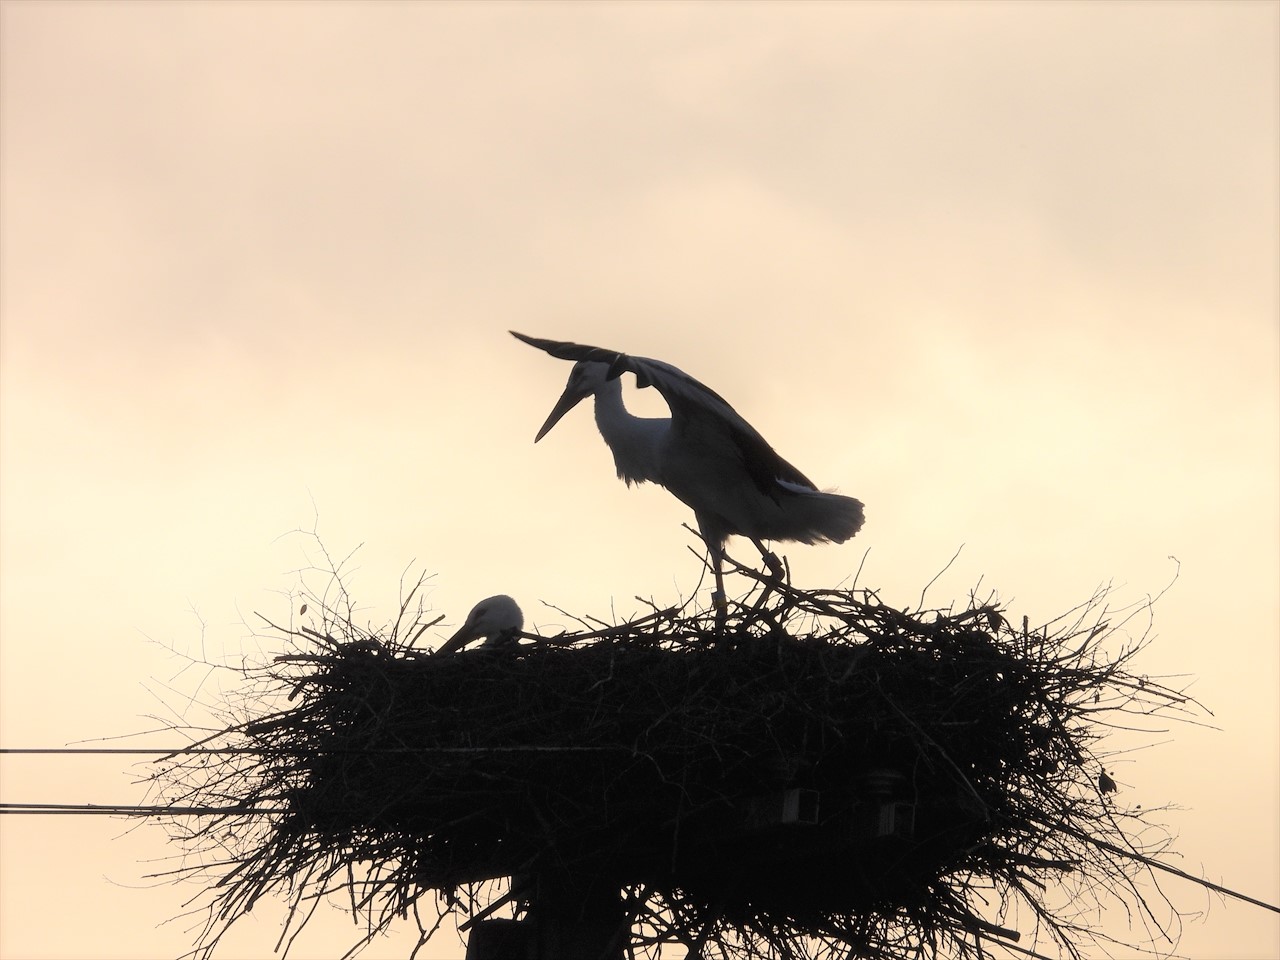 DSCN4597 (2)夕暮れに時に巣上で羽ばたくコウノトリ雛２０２２年５月１４日１８：３５